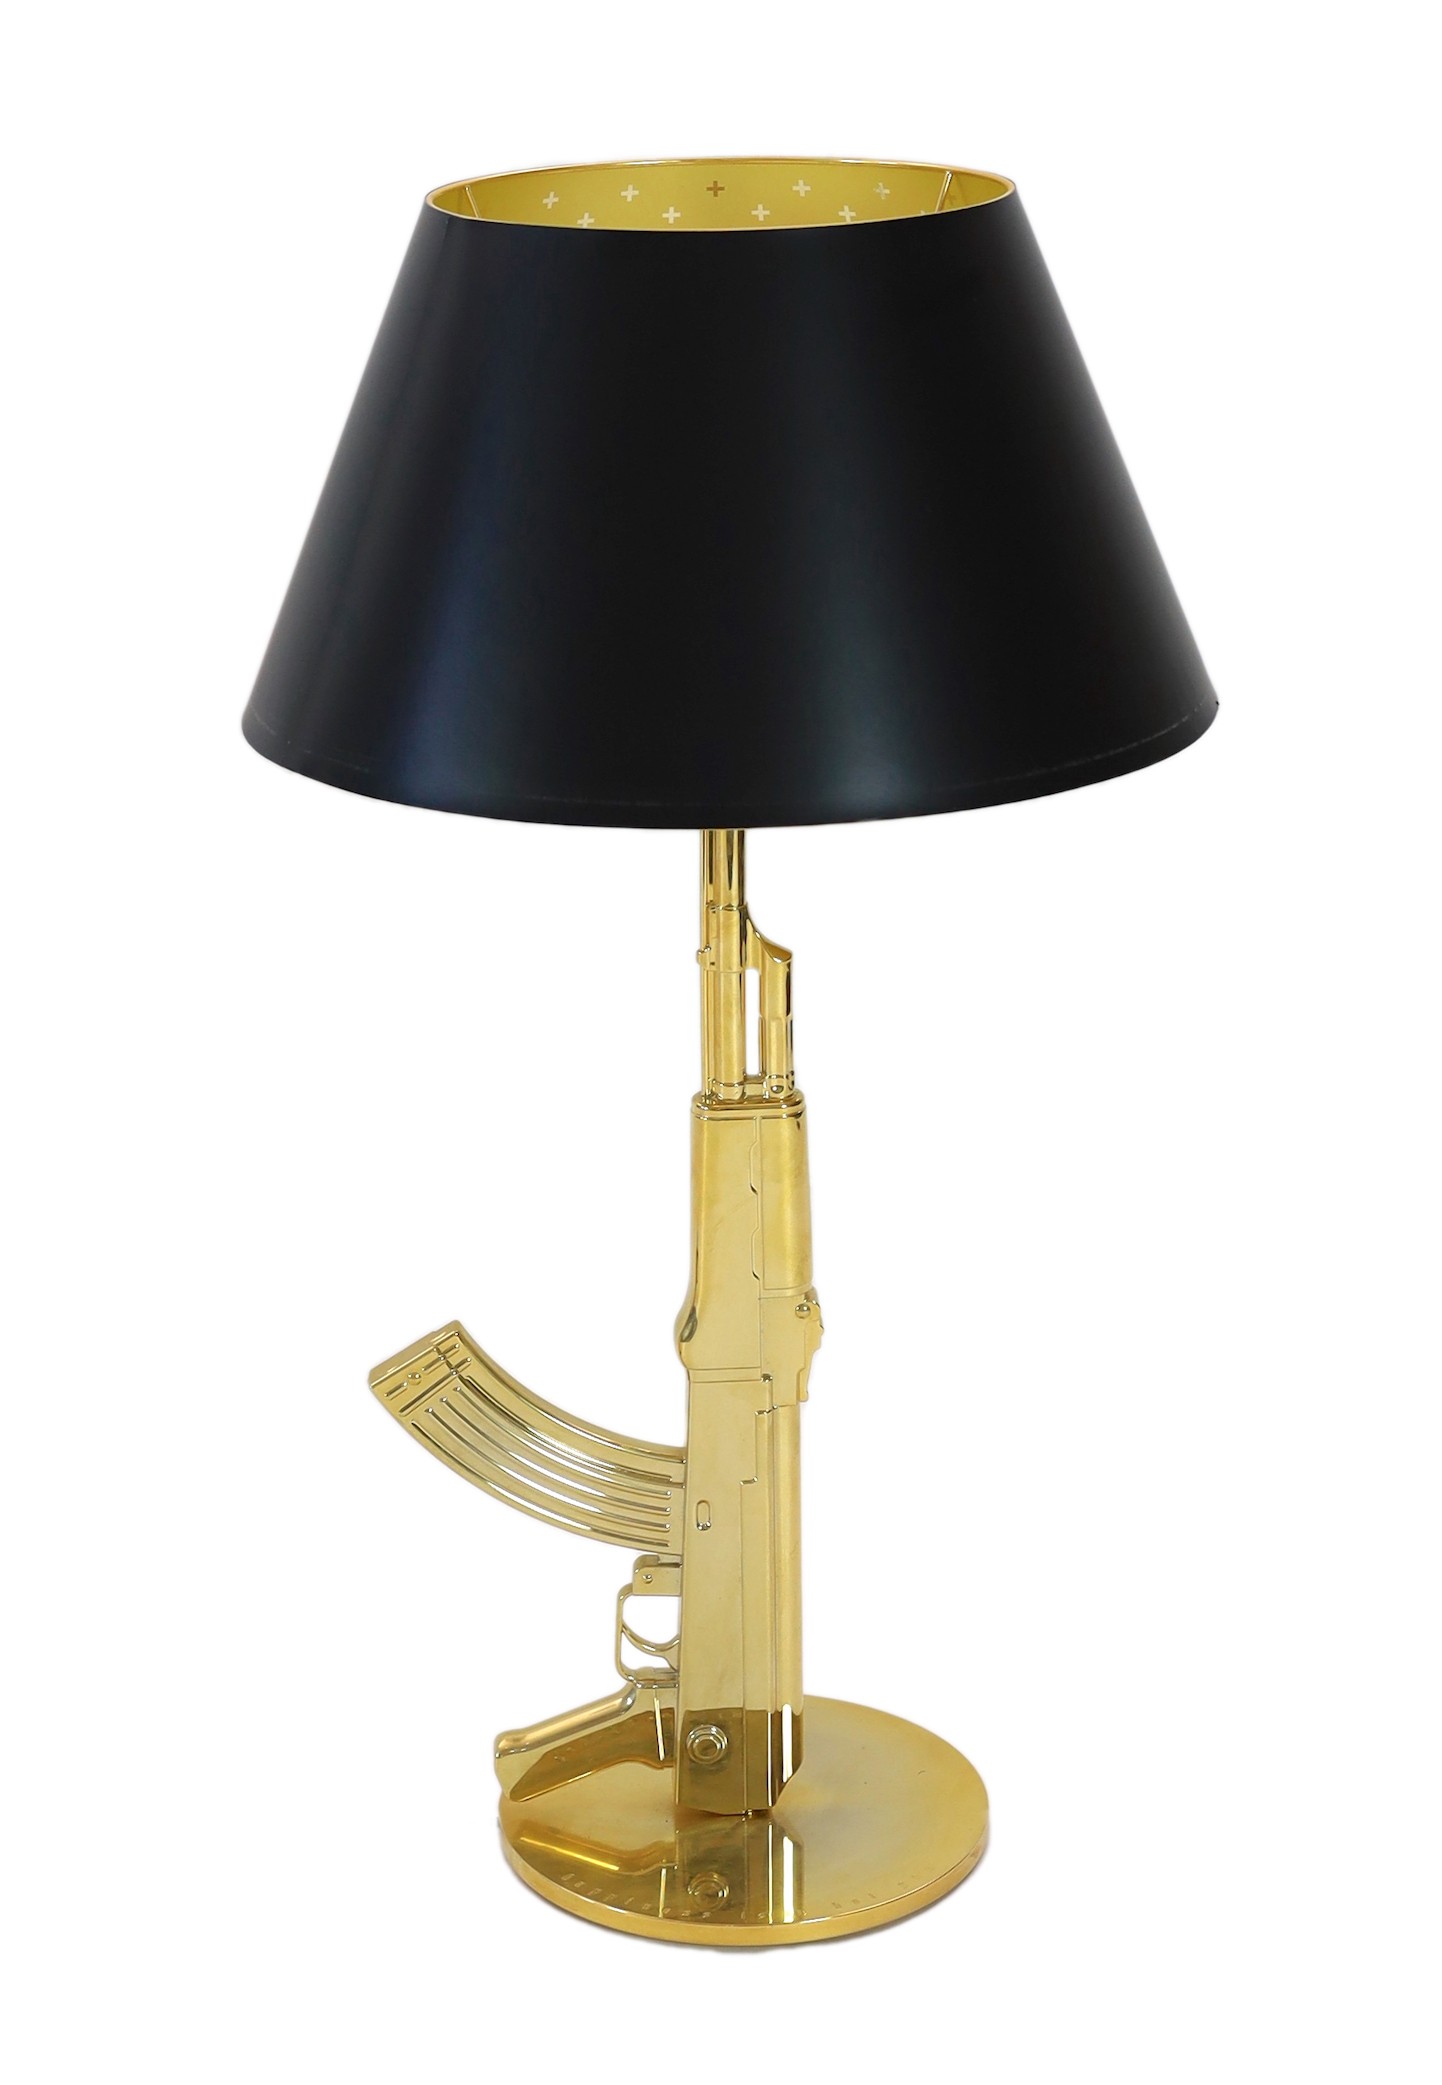 A Philippe Starck gilt metal kalashnikov table lamp, height overall 93cm